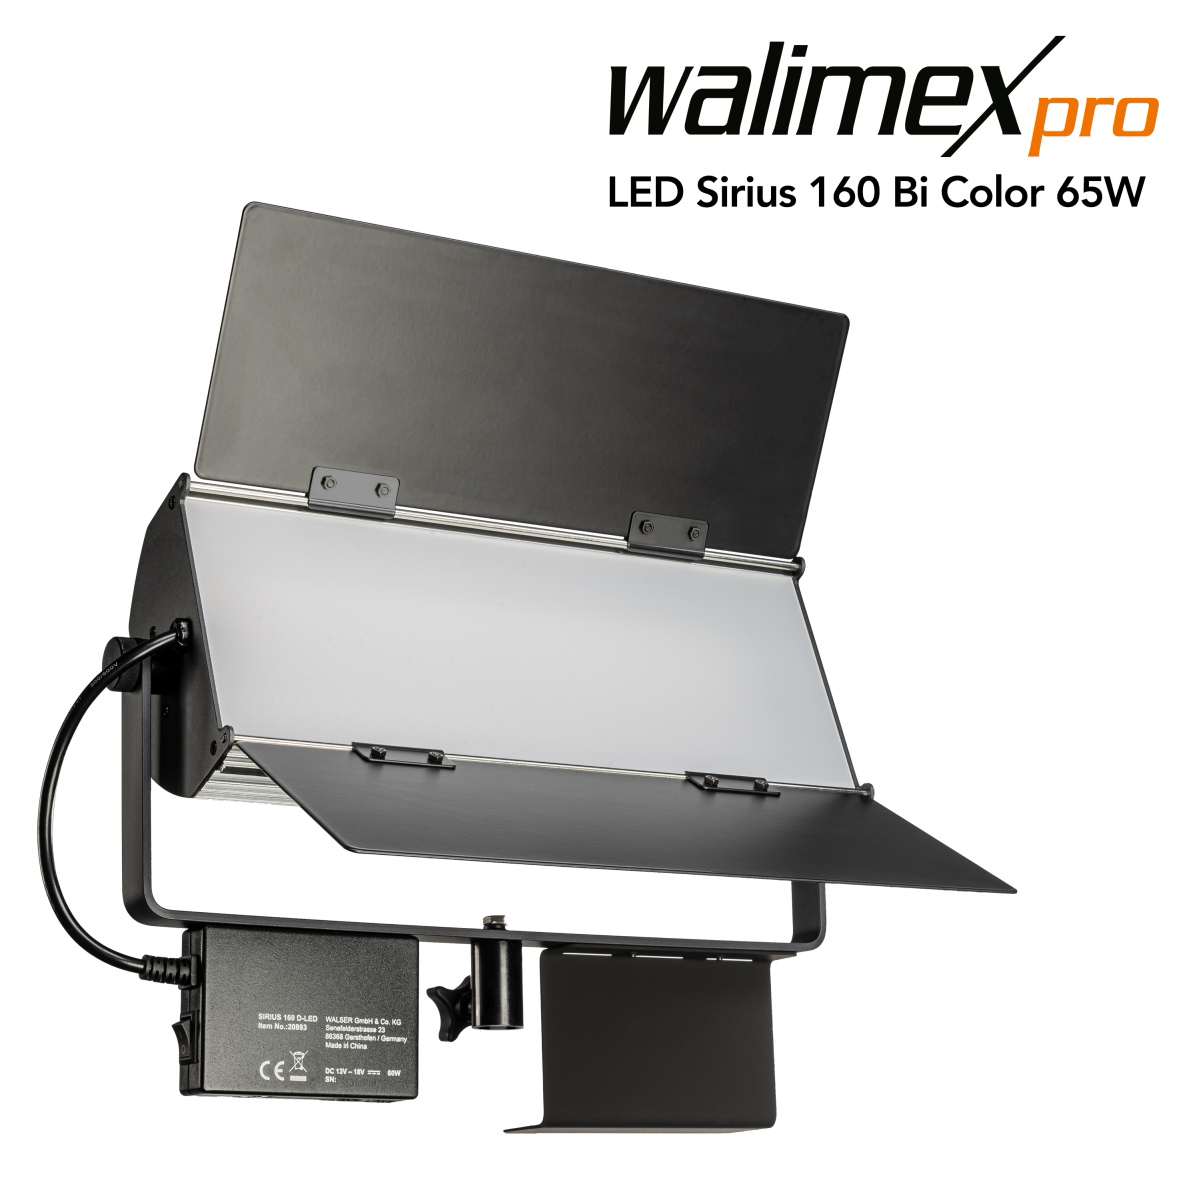 Walimex pro LED Sirius 160 Bi Color 65 W LED Flächenleuchte